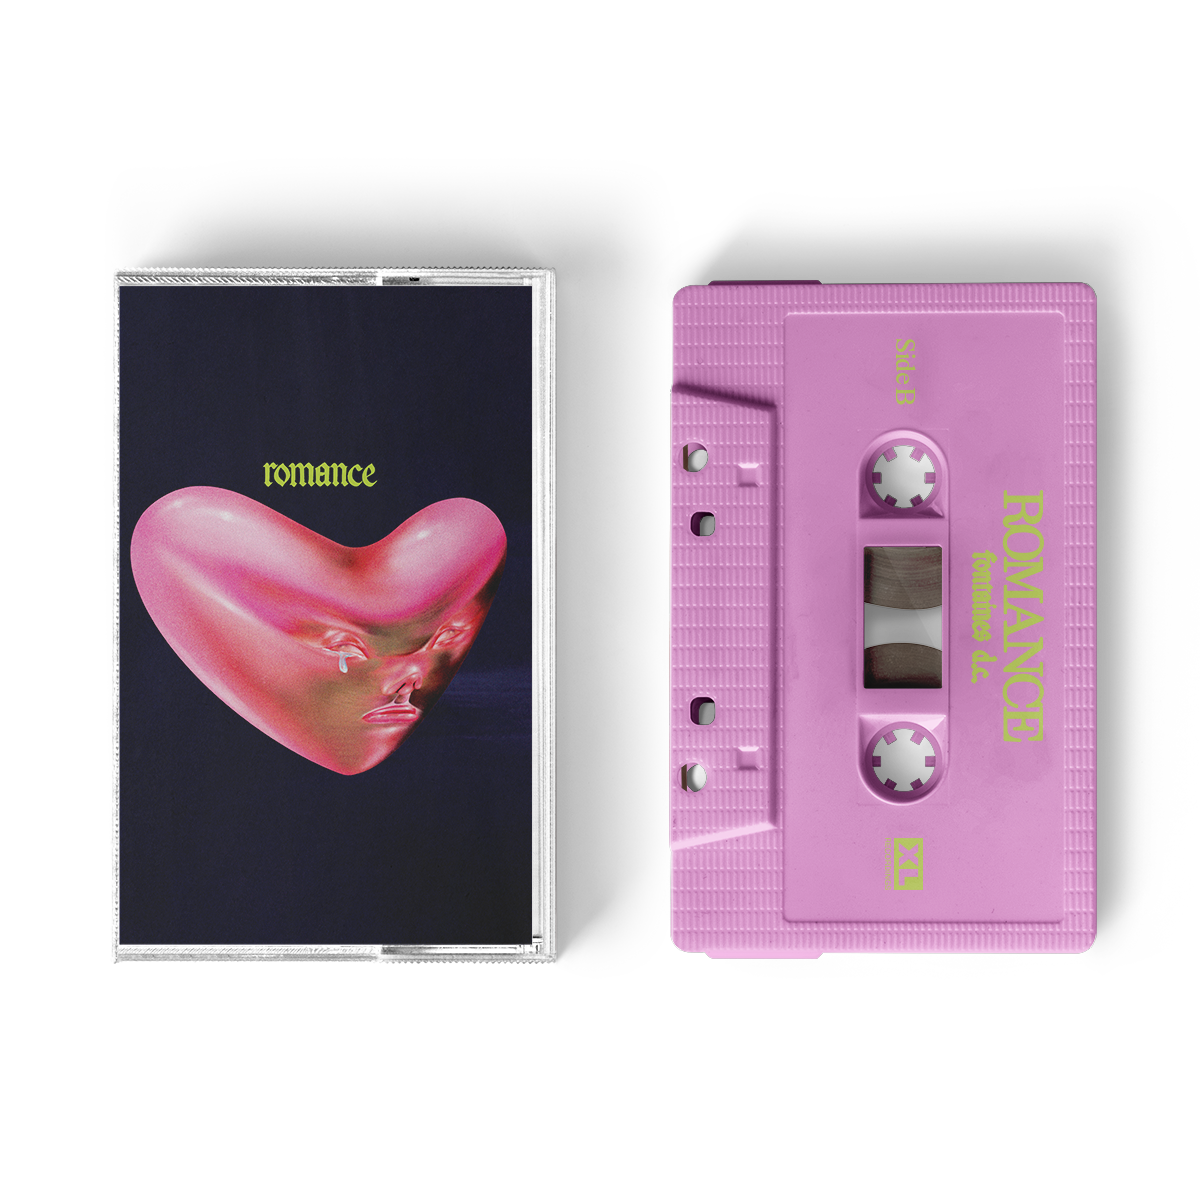 Romance Alternative Art Cassette